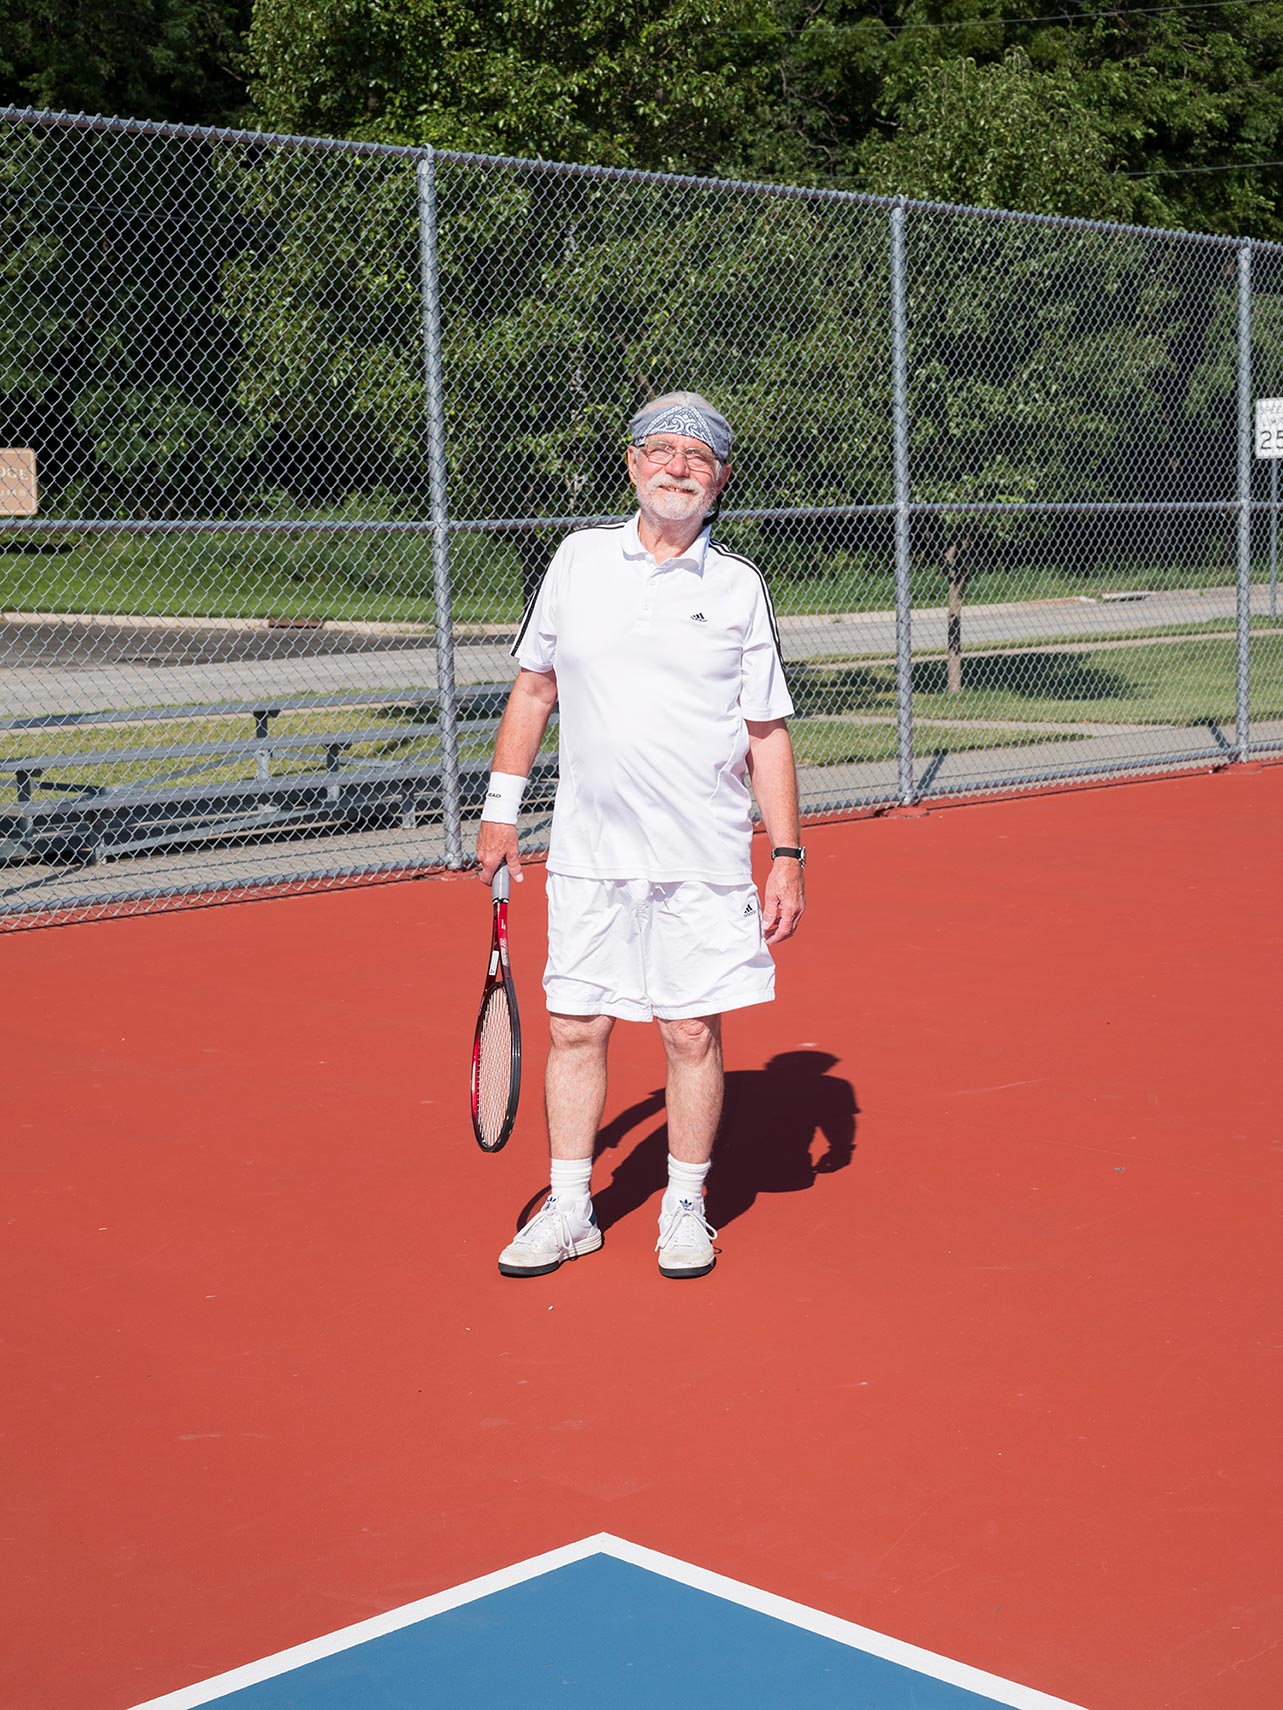 Dana Damewood Photography | Charleston South Carolina portrait photography style tennis dennis small